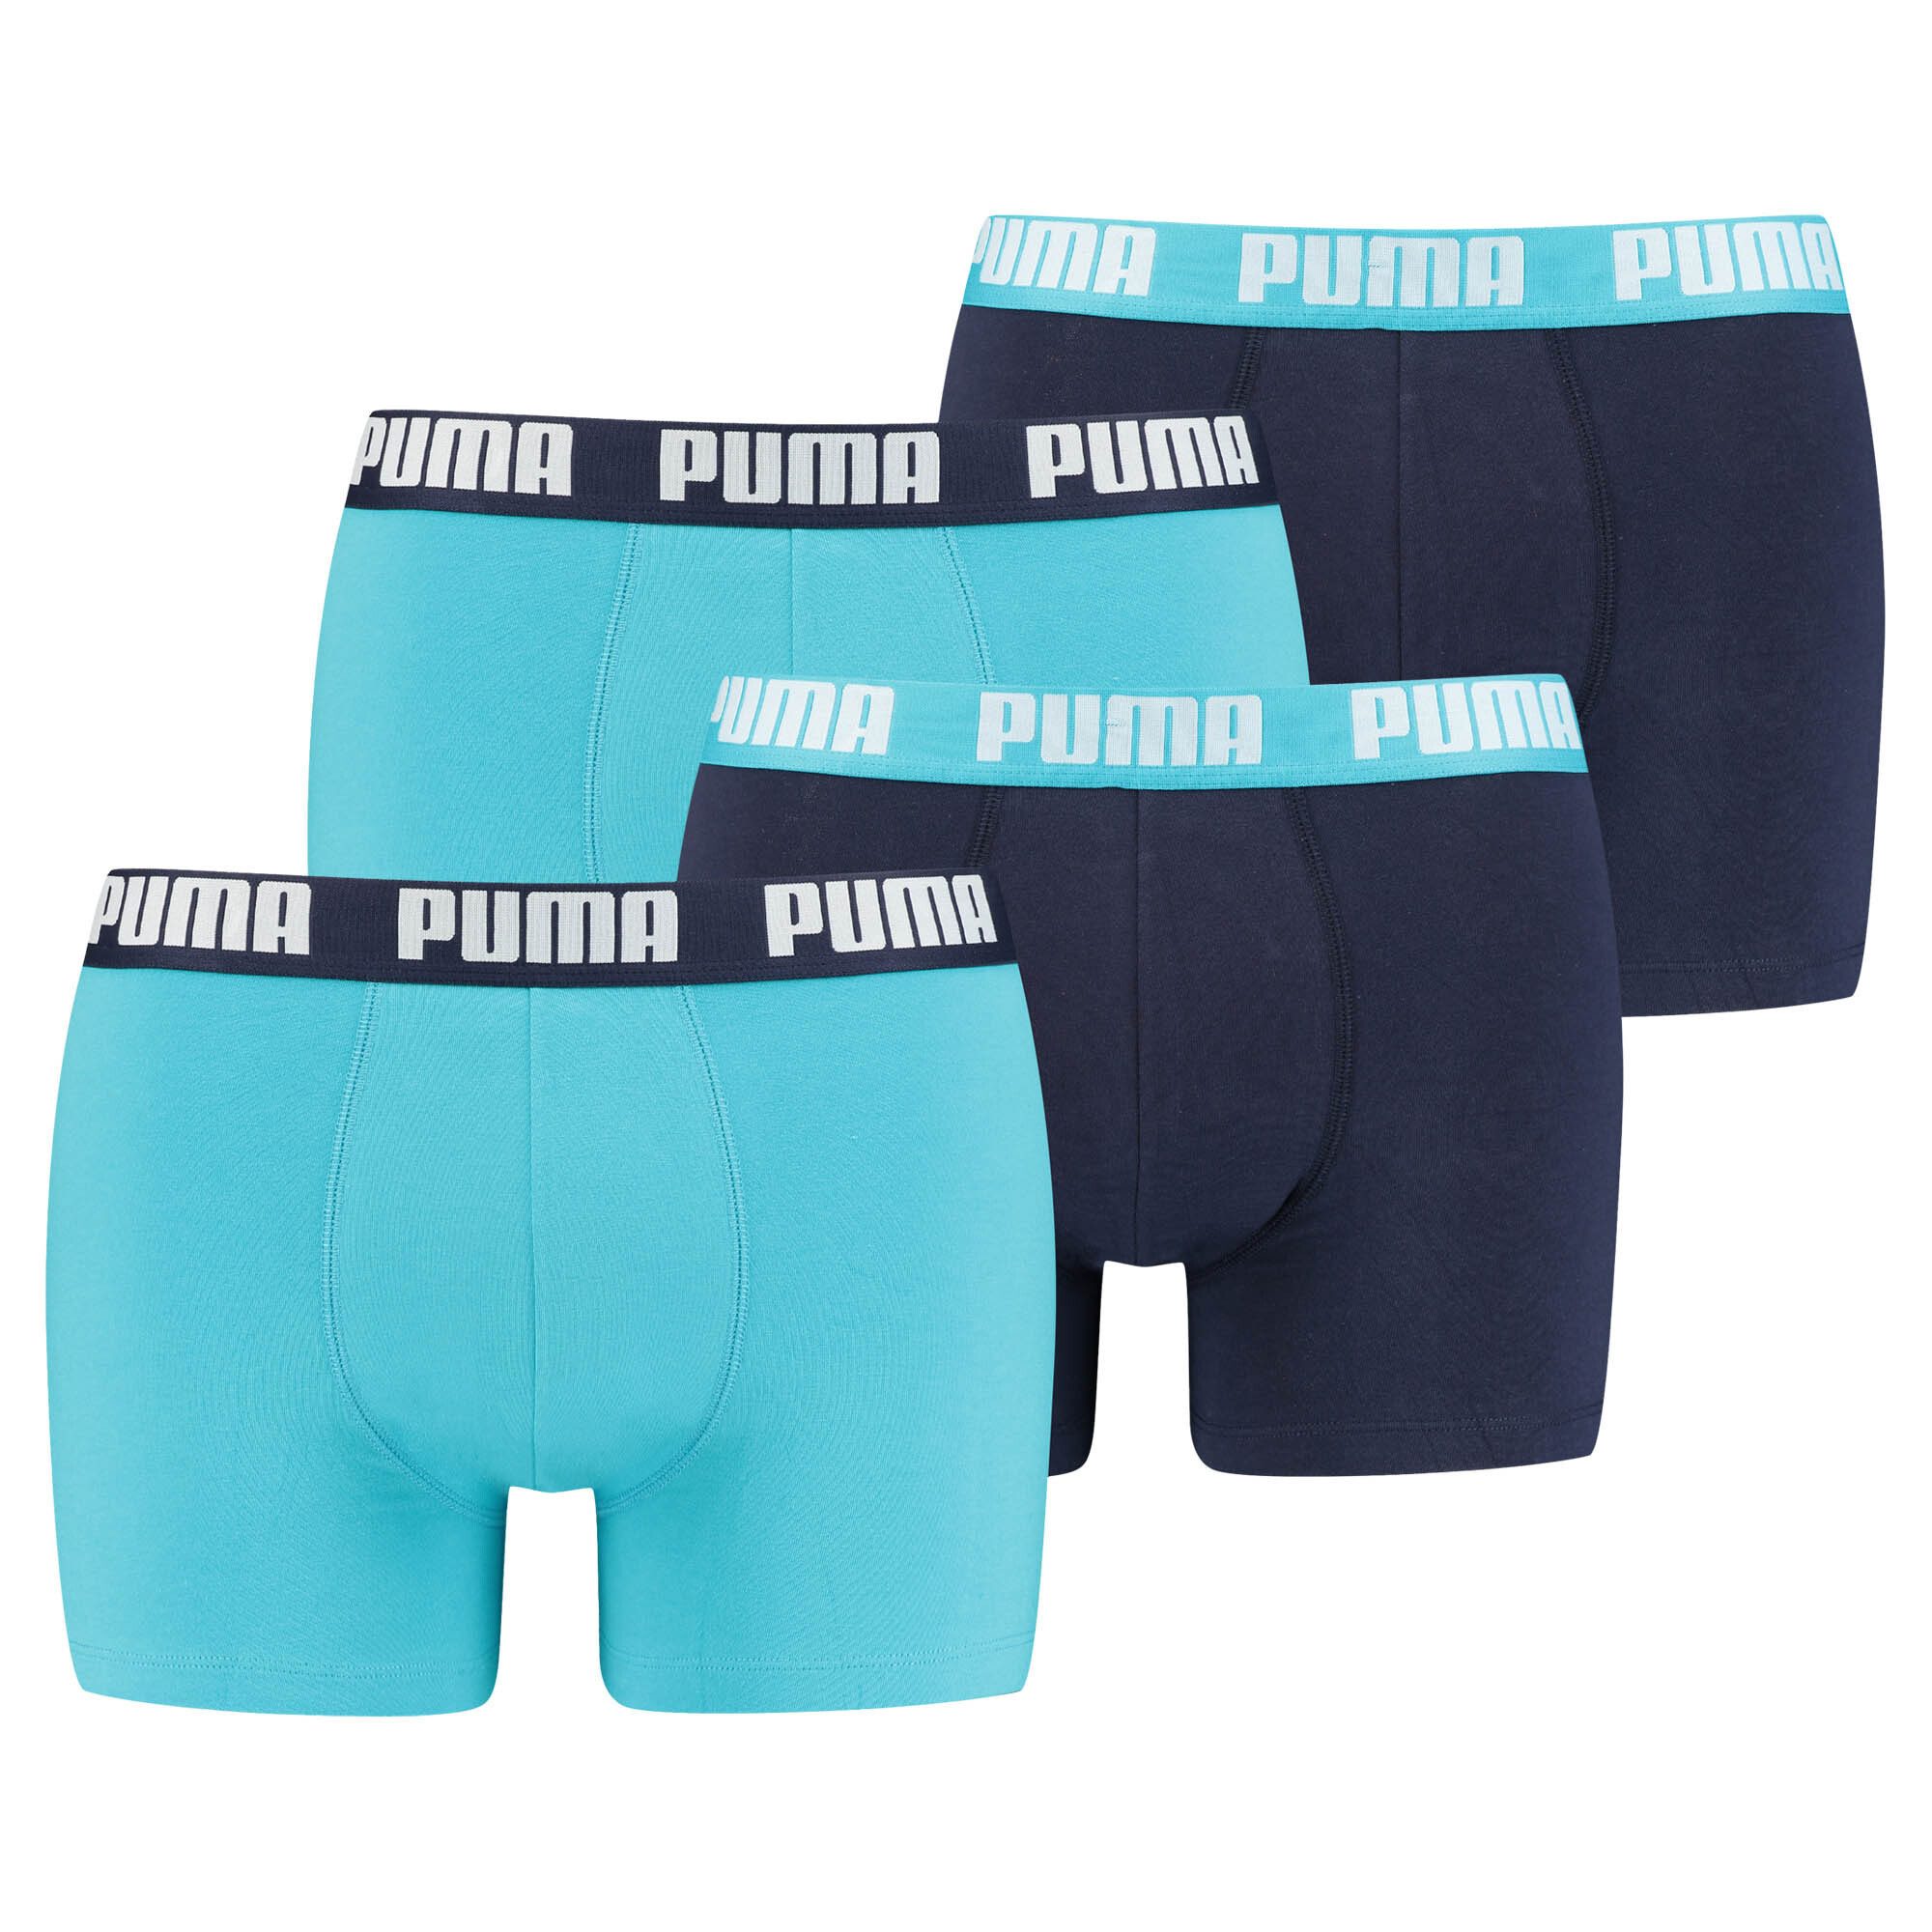 PUMA Boxer Herren Boxer Shorts, 4er Pack - Boxers, Cotton